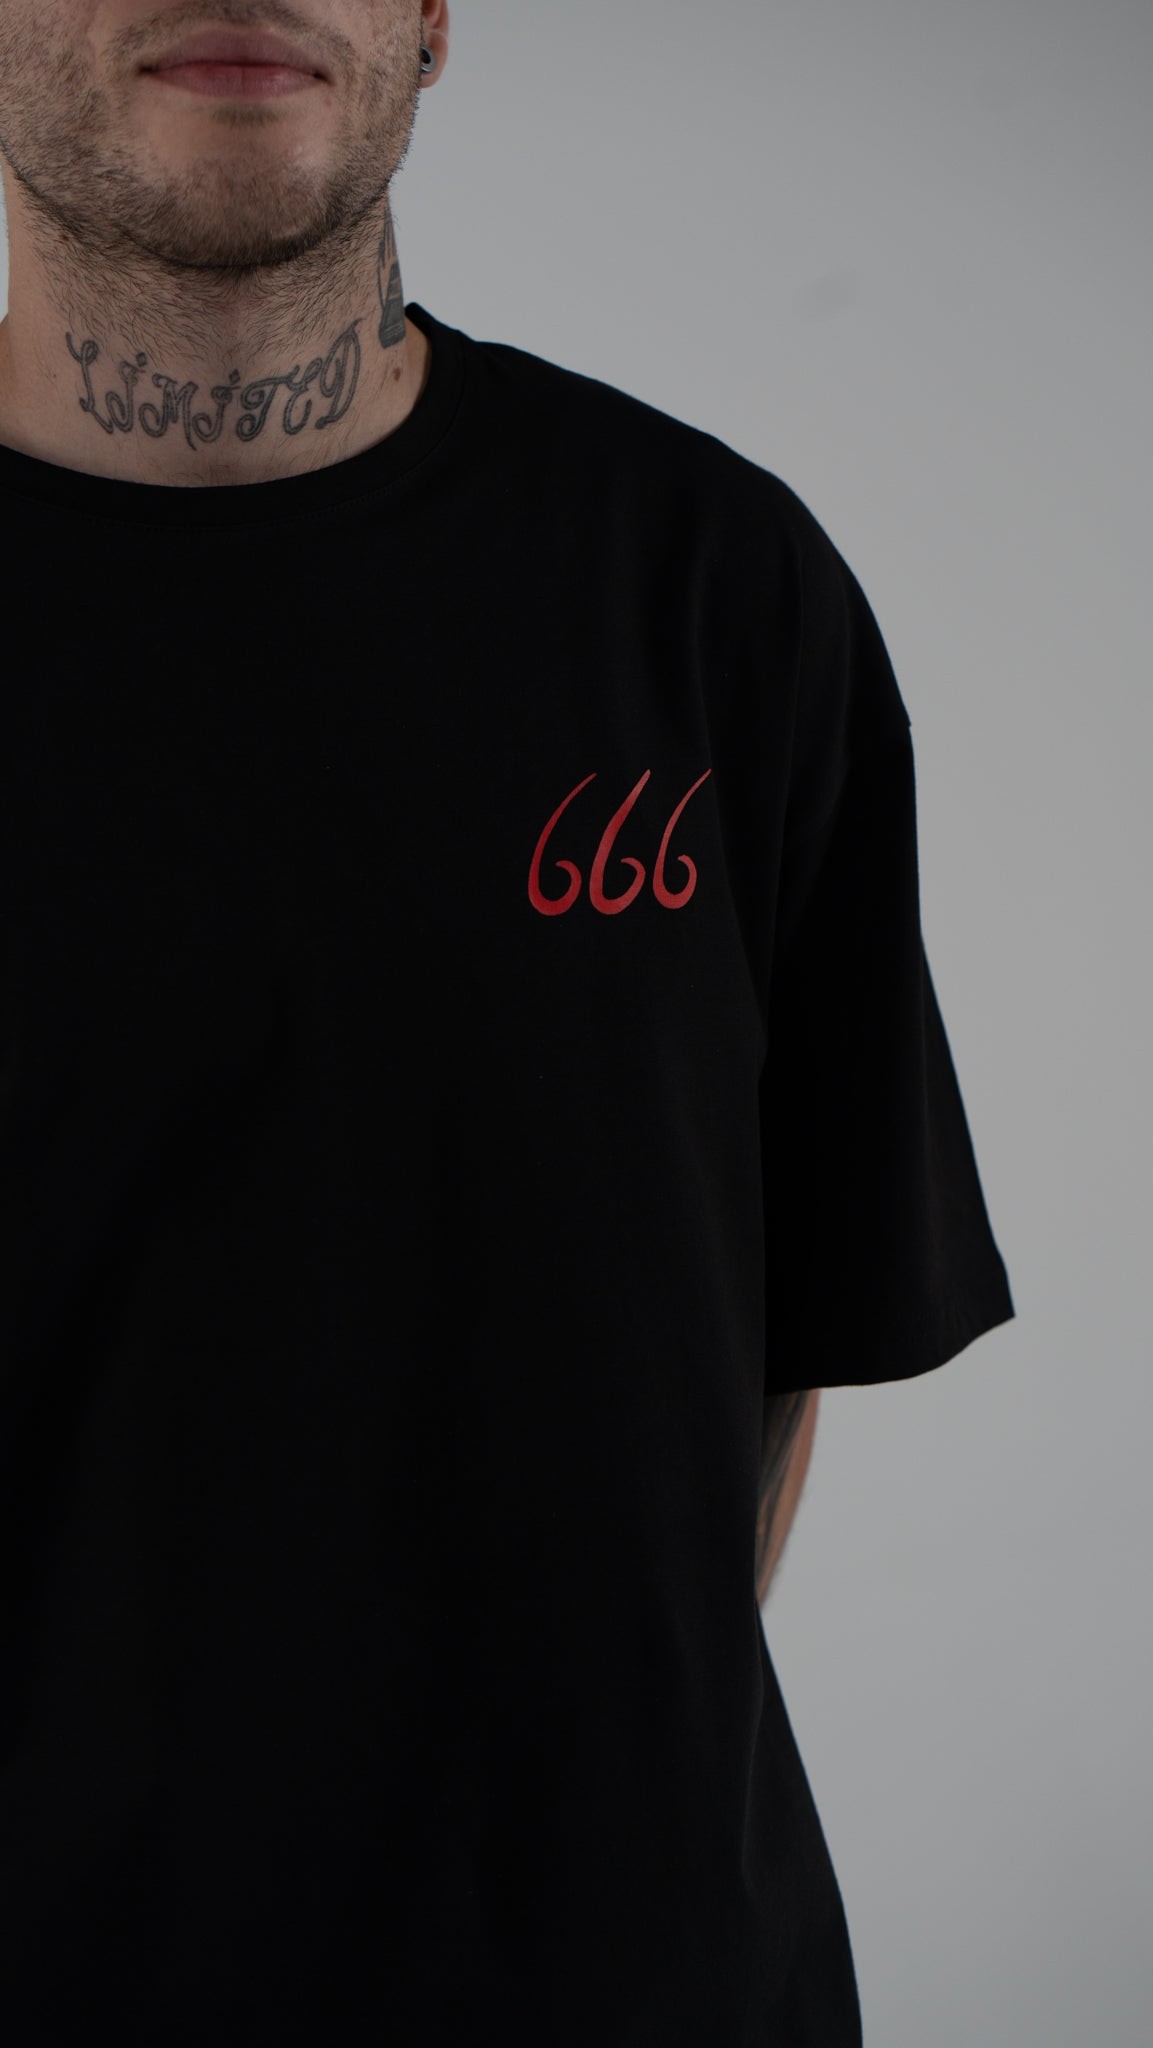 Karma 666 Limited Edition T Shirt